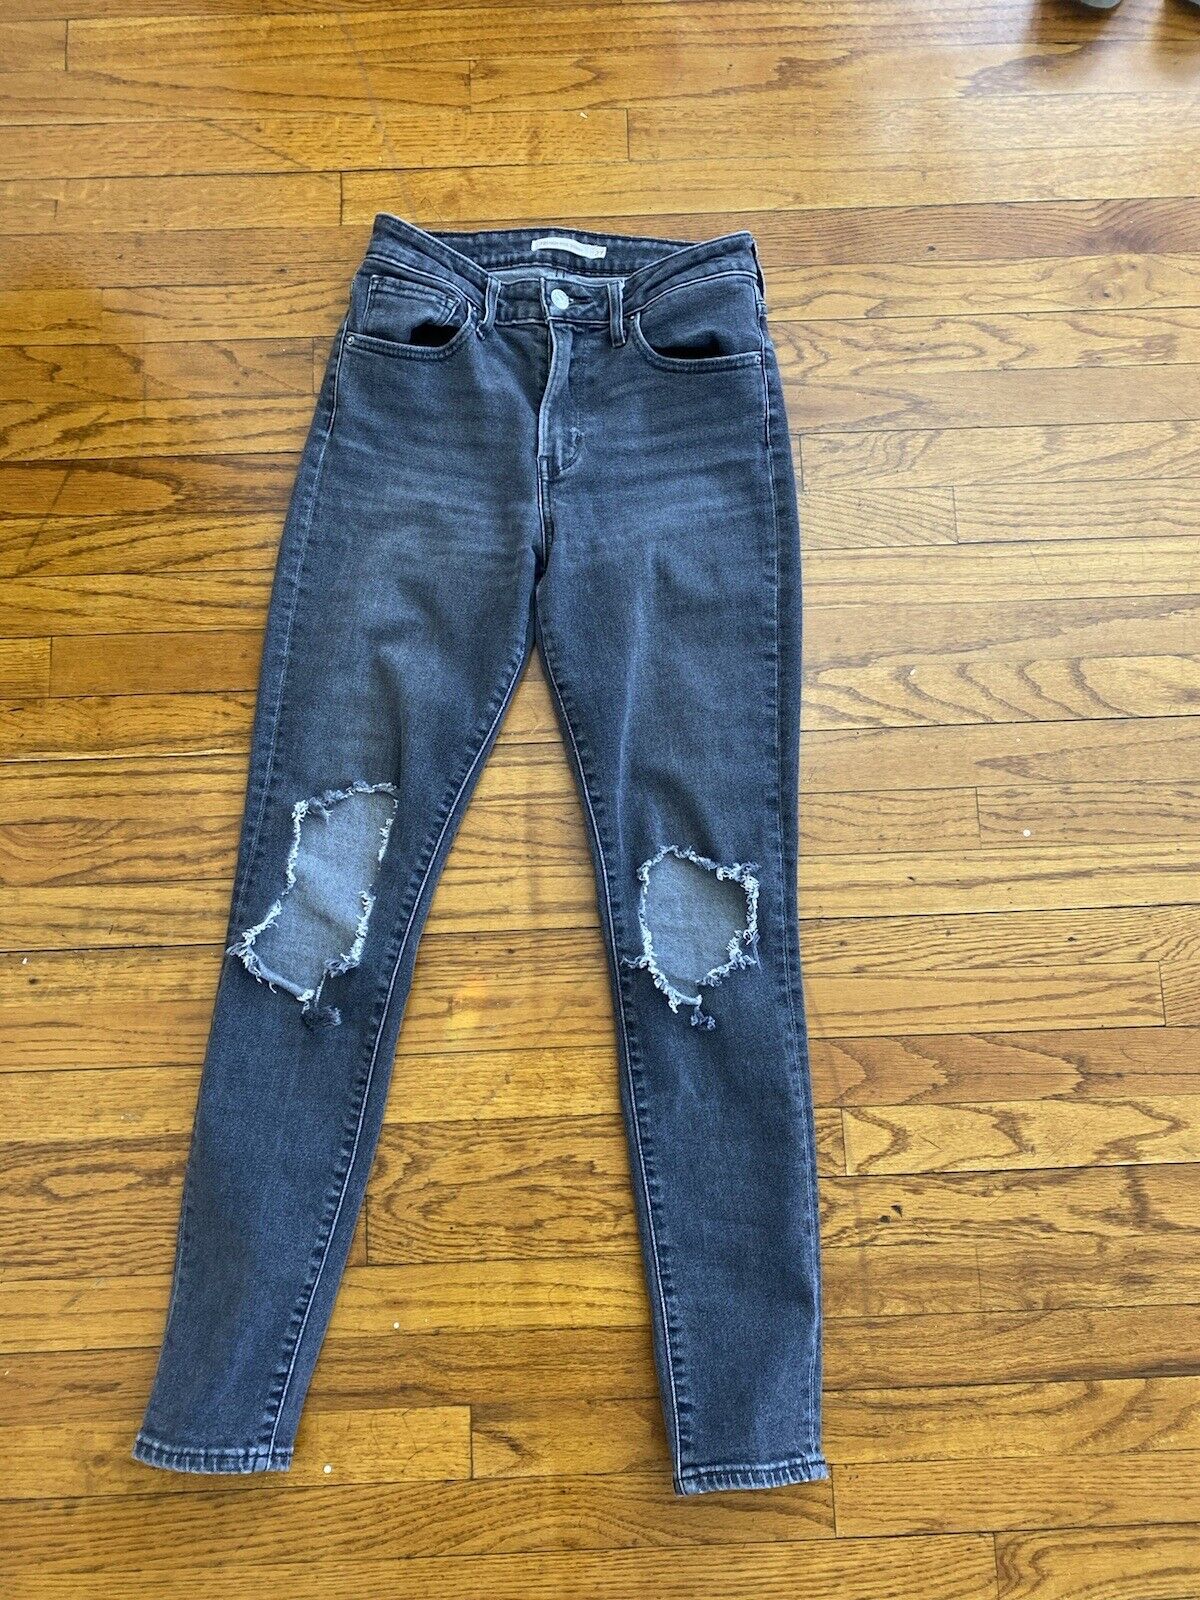 Black High Rise Skinny Jeans - Levi’s 721 - Women’s 27